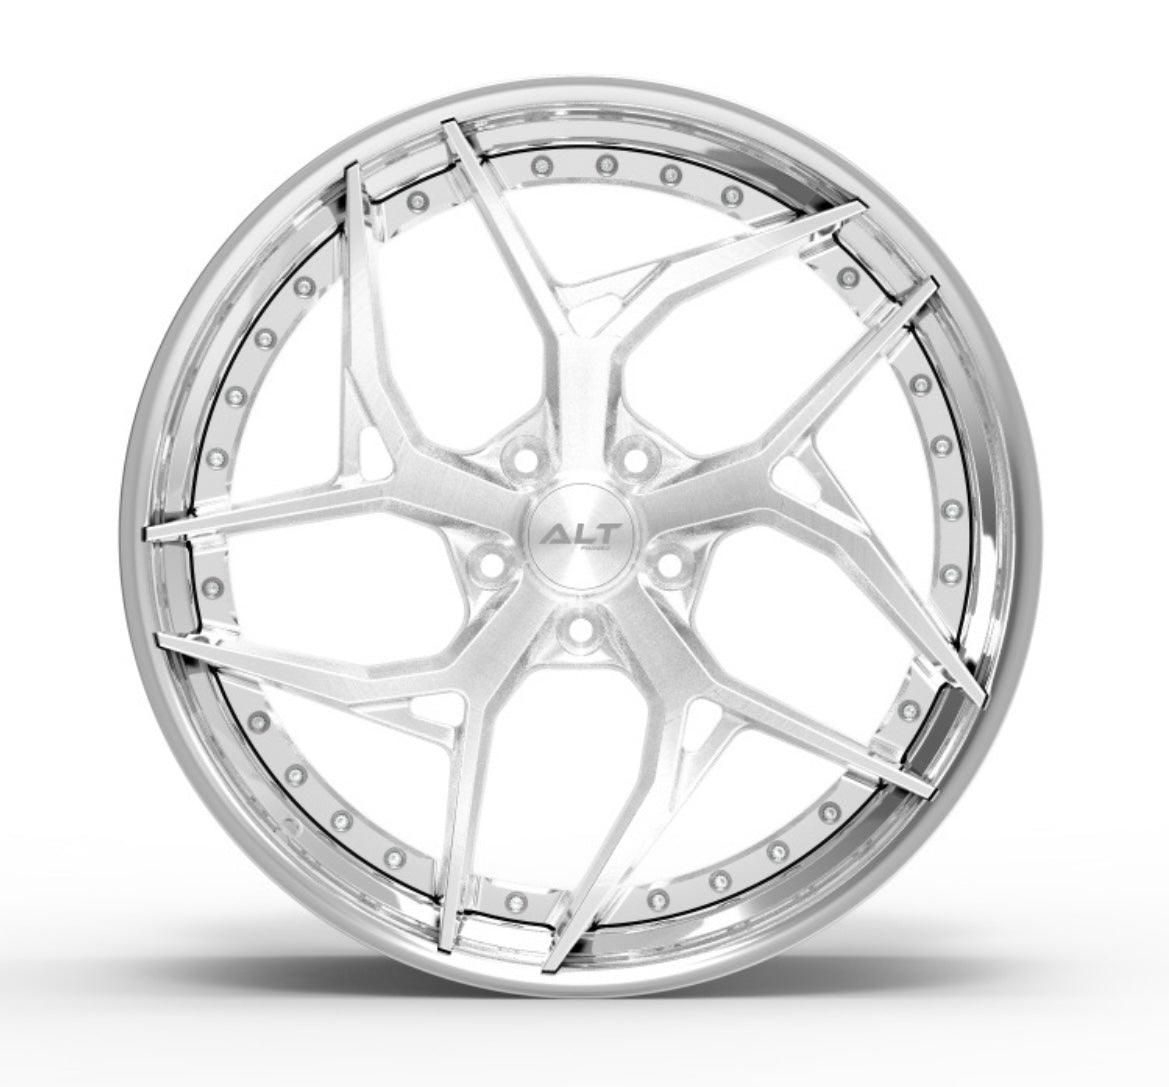 ALT DL12 Forged 2 Piece Brushed Aluminum with Polished Lip wheels for C8 Corvette Z51